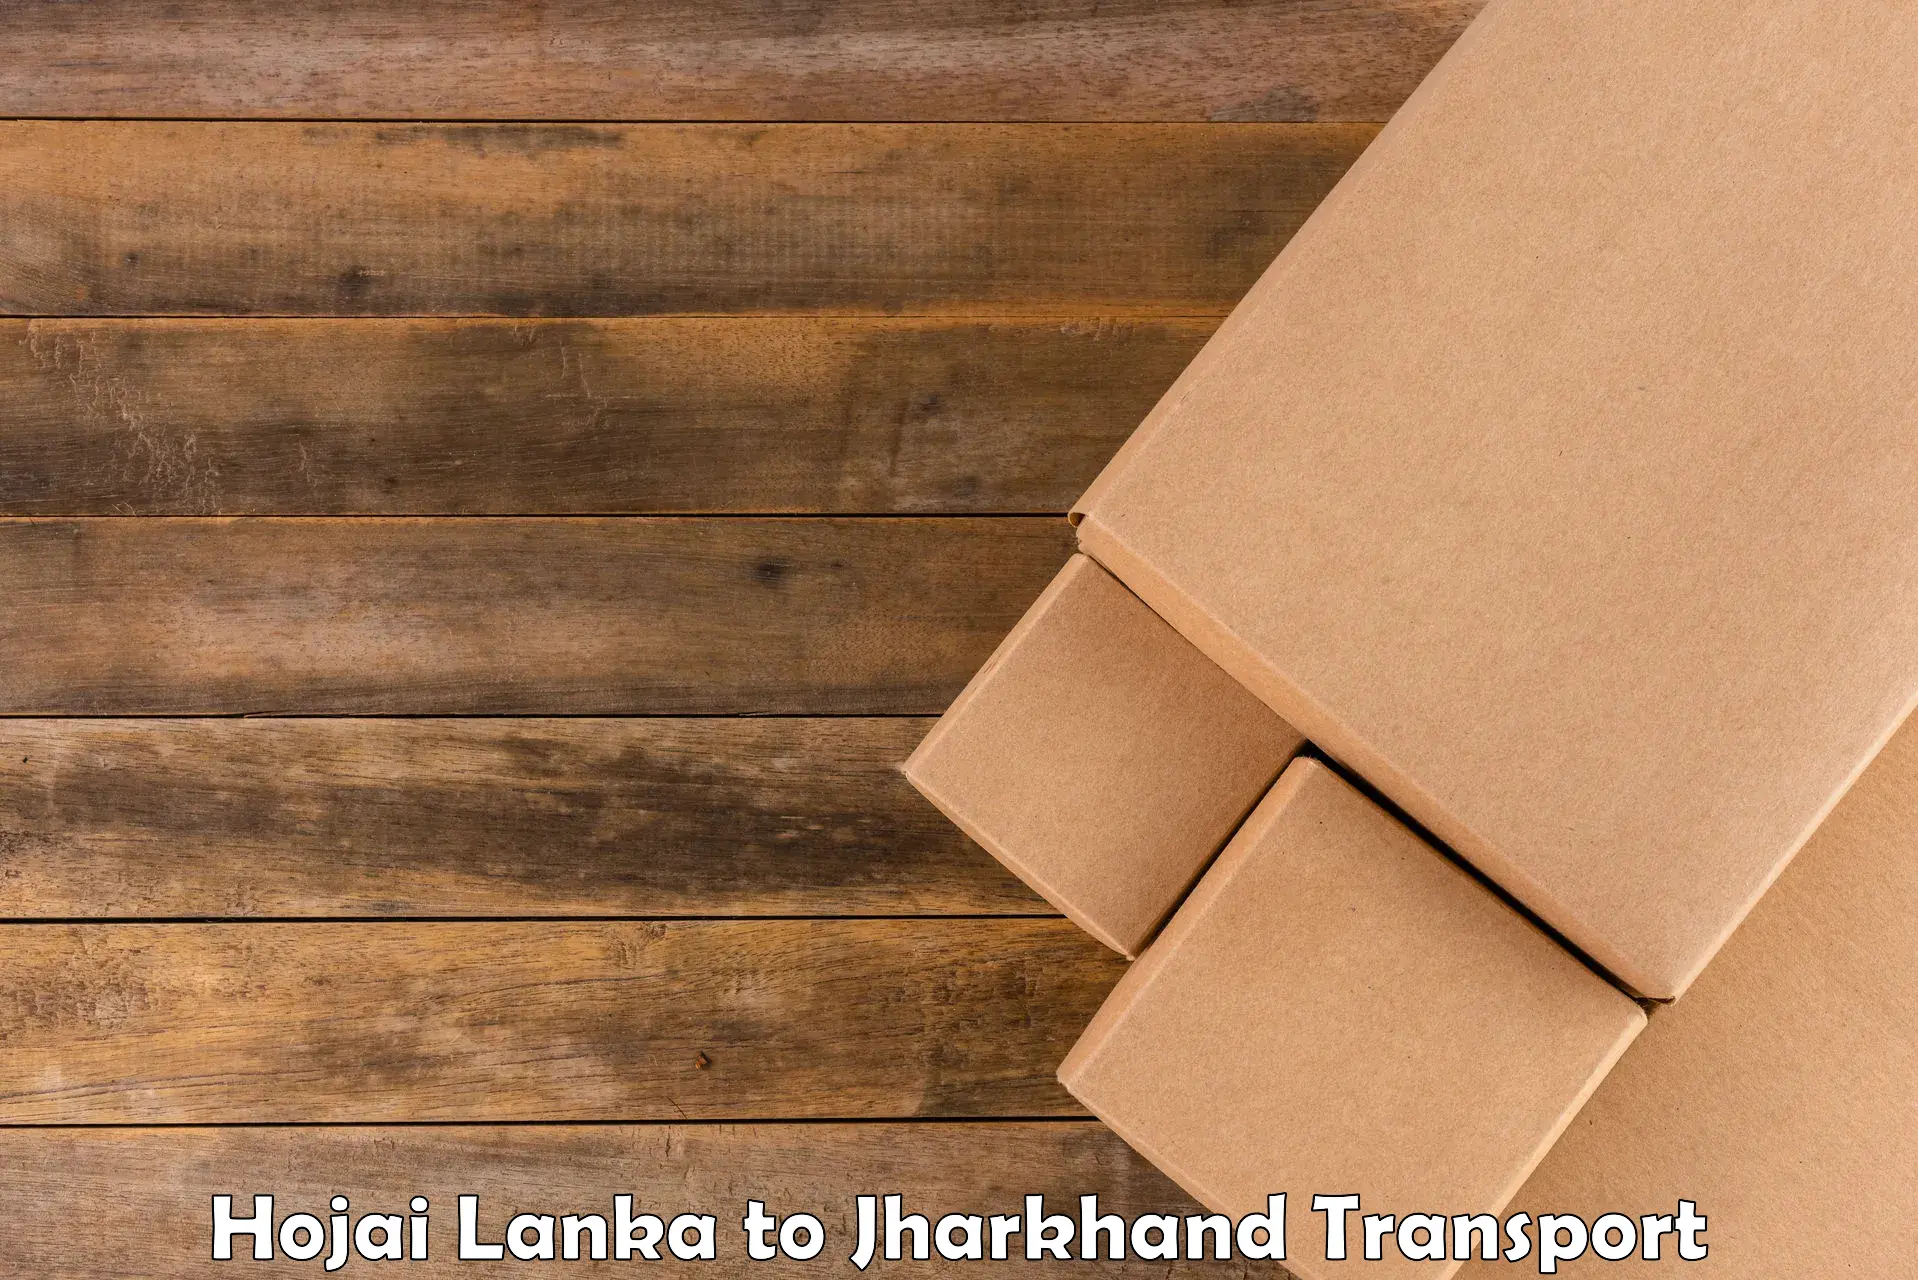 Domestic goods transportation services Hojai Lanka to Chatra